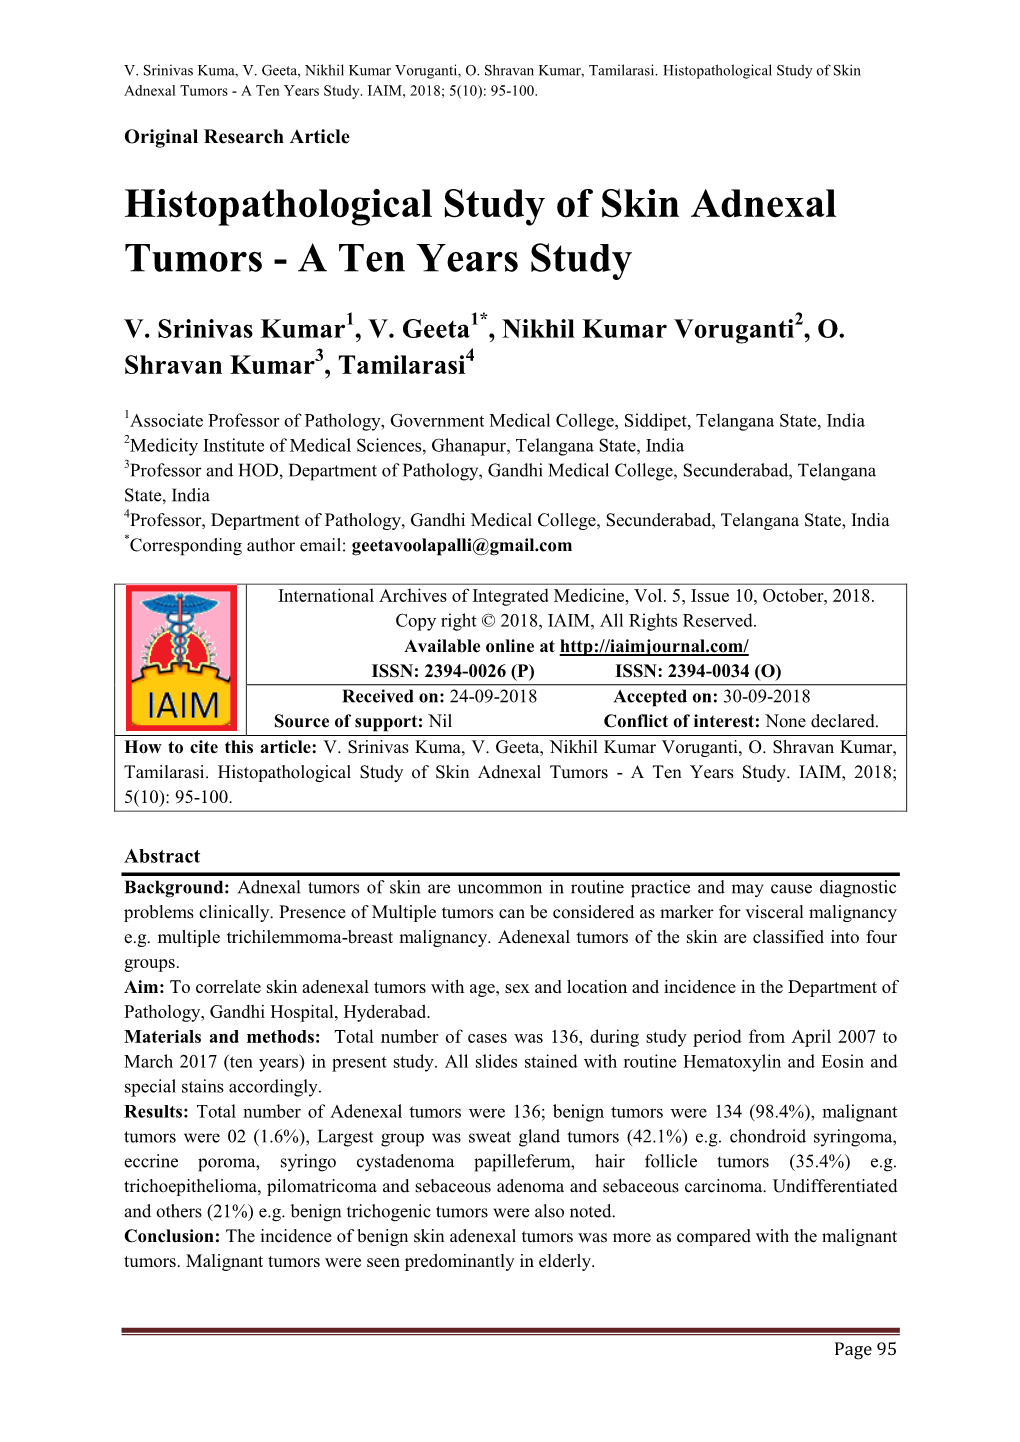 Histopathological Study of Skin Adnexal Tumors - a Ten Years Study